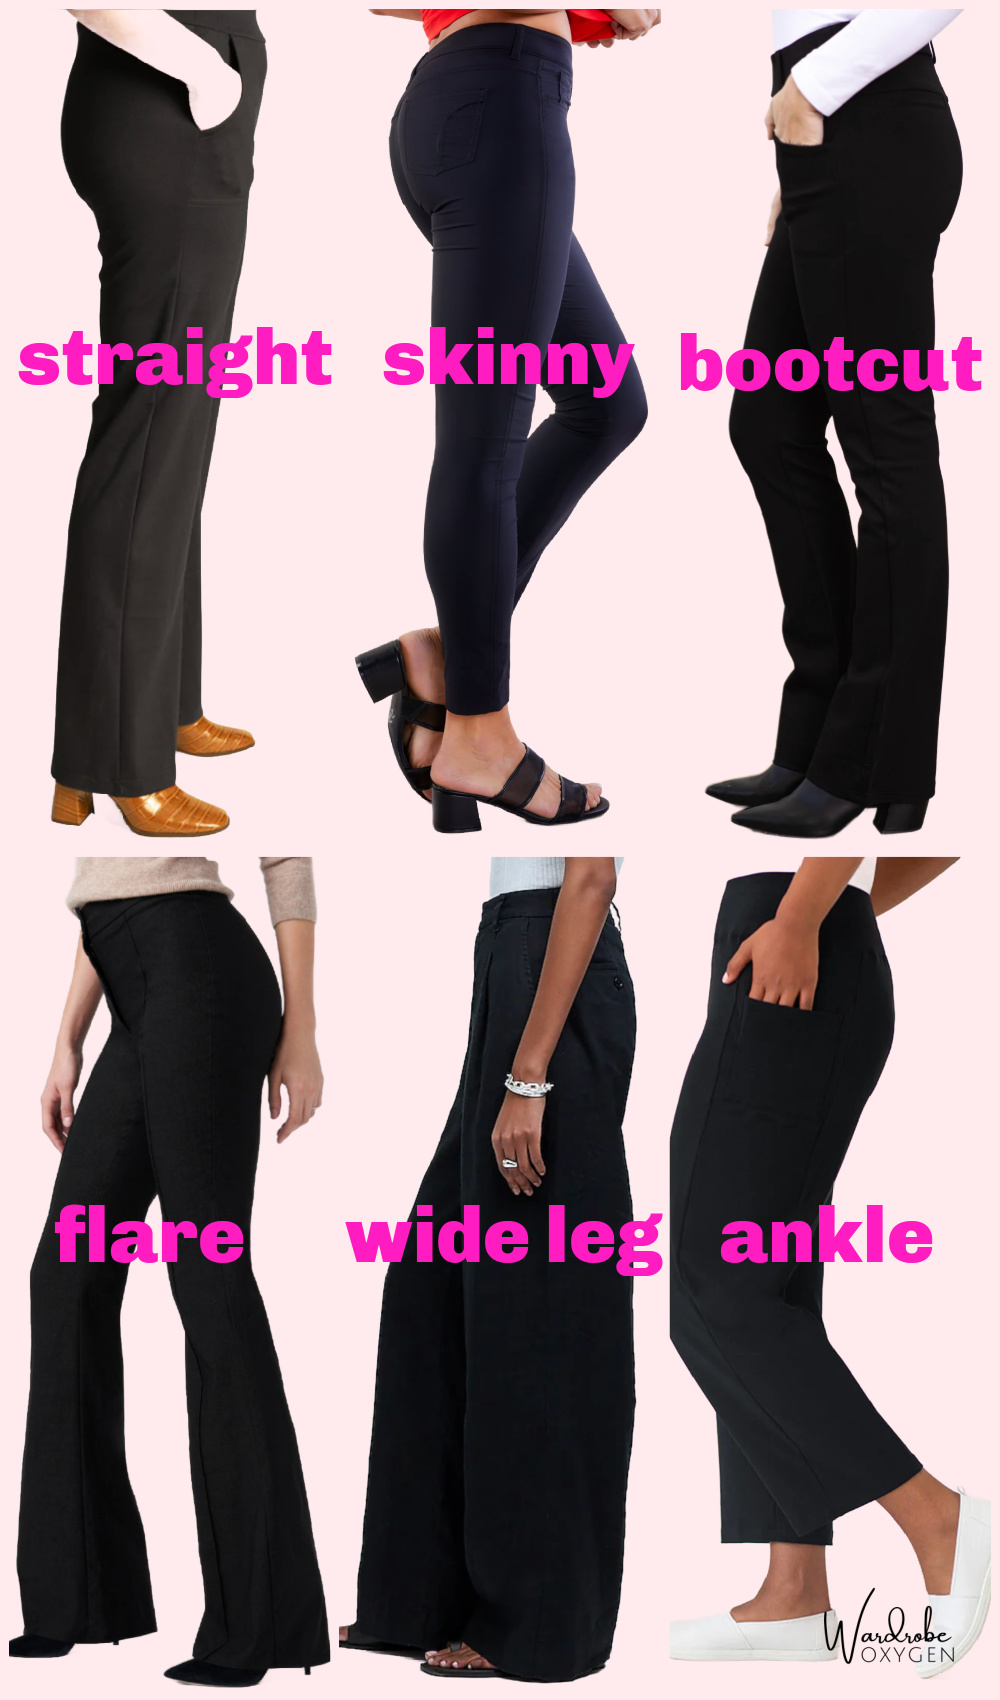 women, model, ass, legs, feet, skinny, fitness model, pointed toes